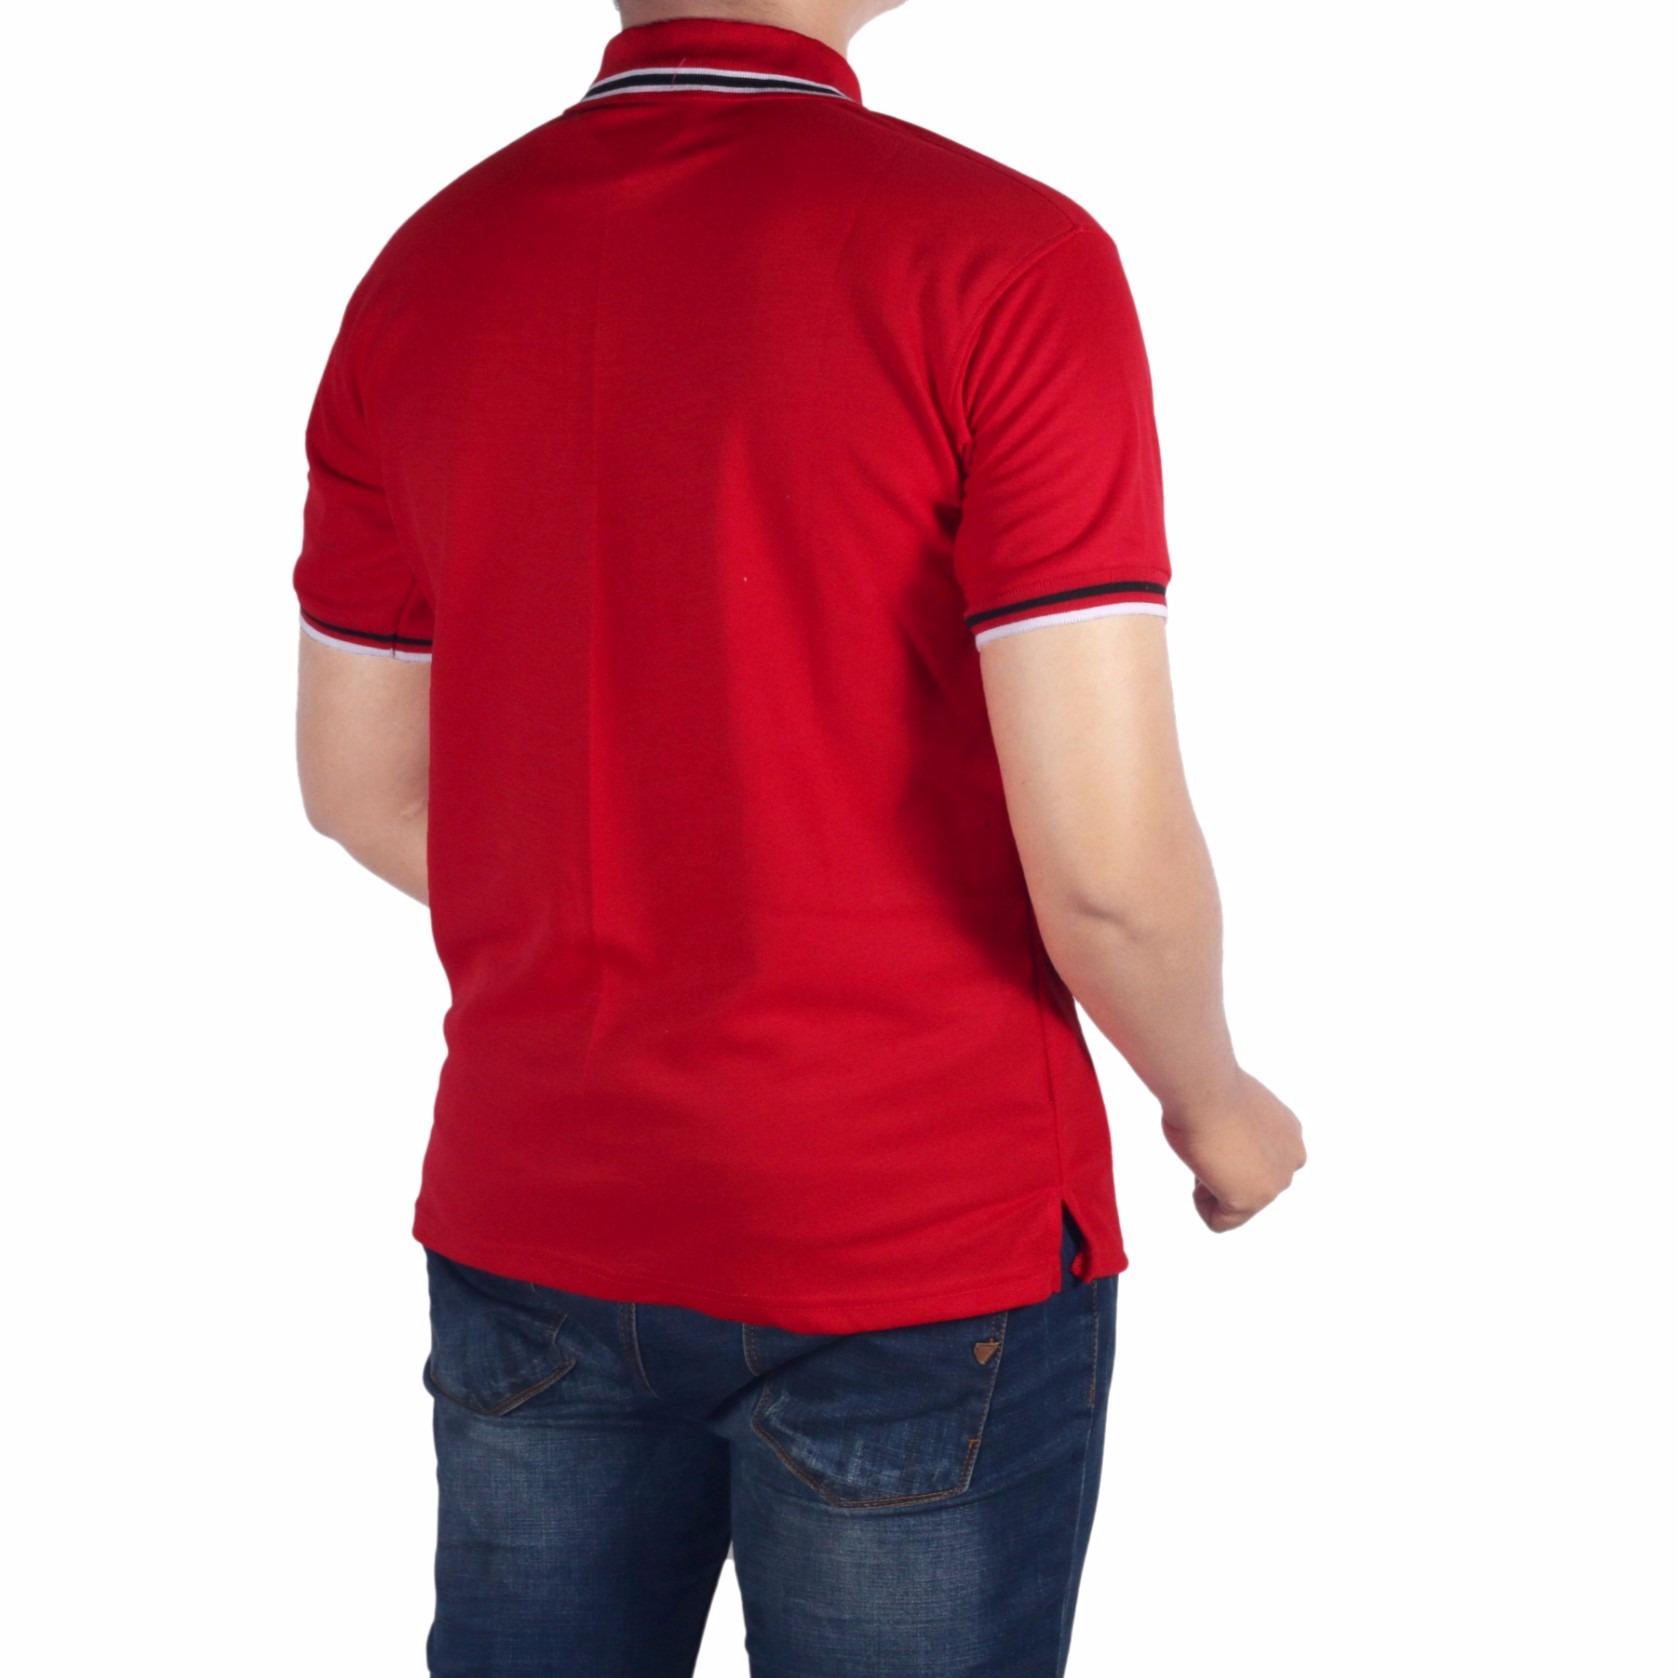 Cek Harga Baru Dgm fashion1 Baju Kaos Kerah Polos Merah  